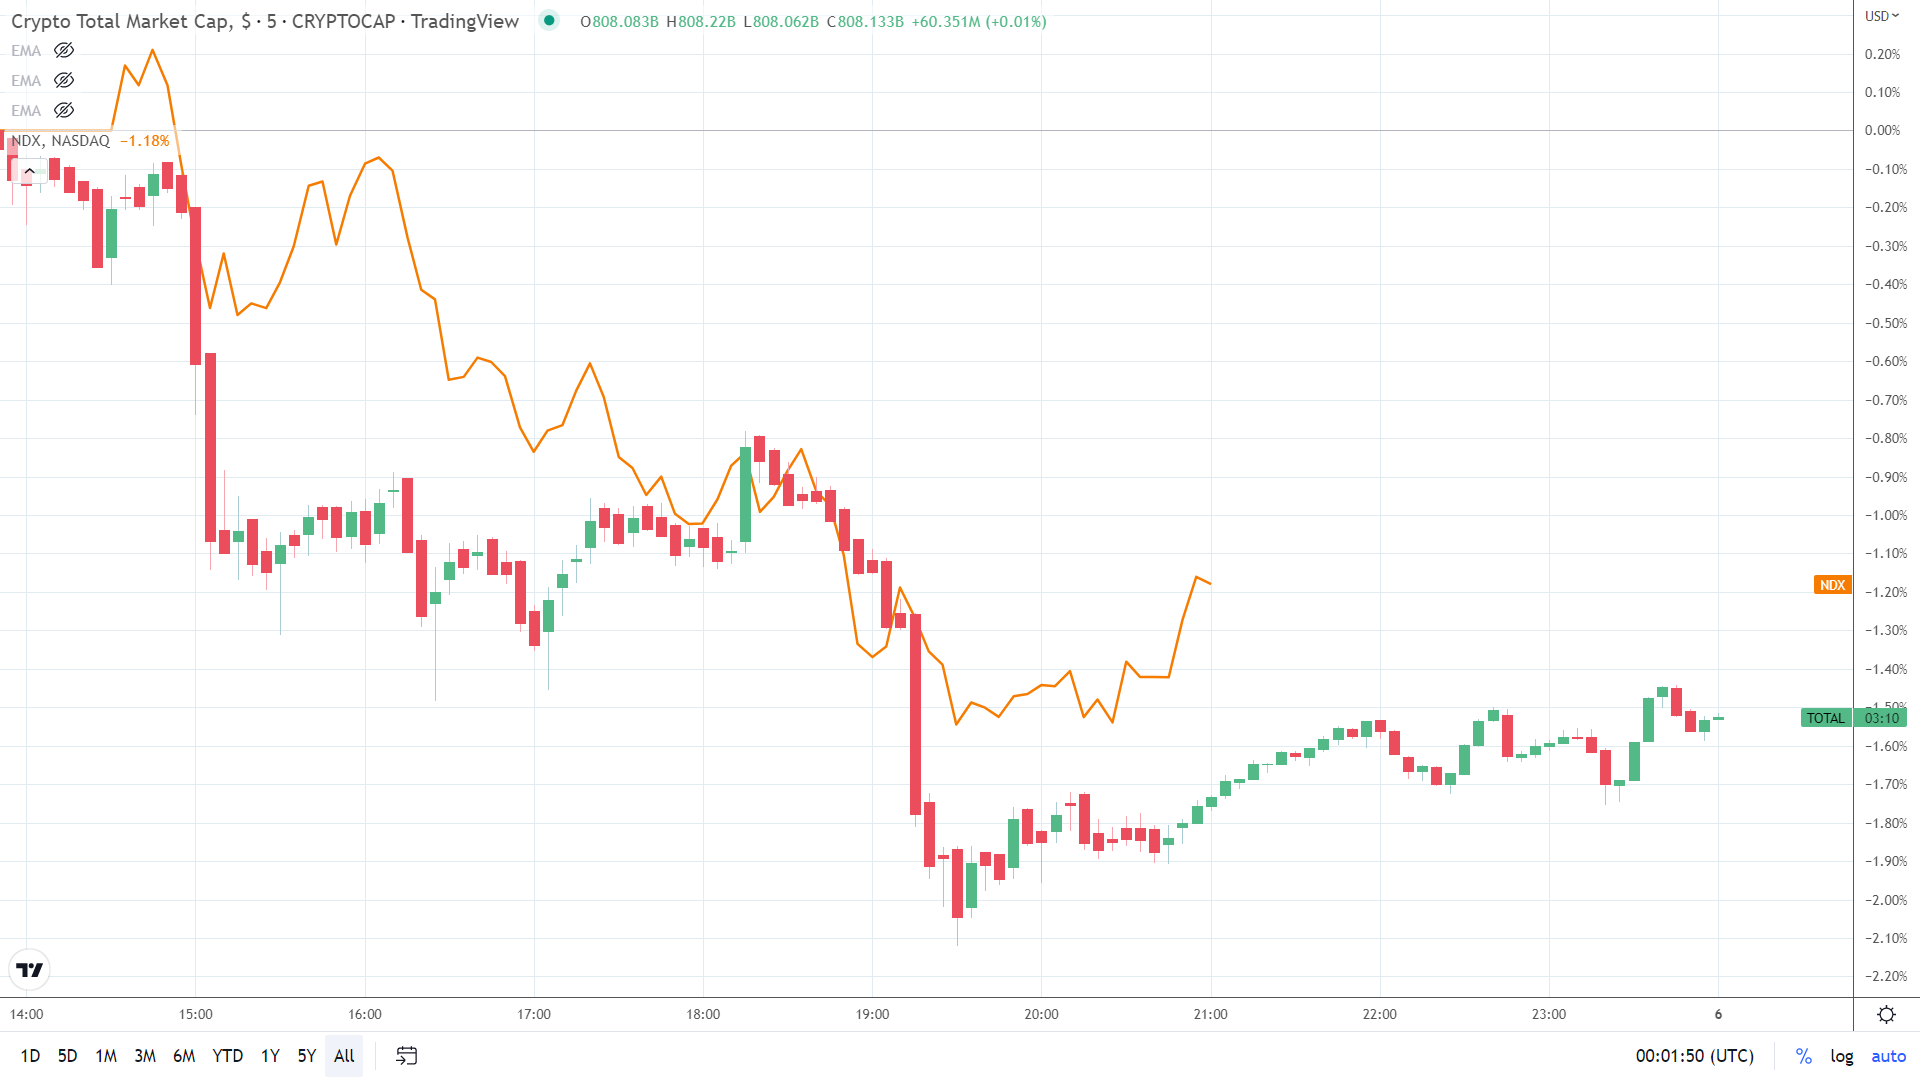 NASDAQ correlation.